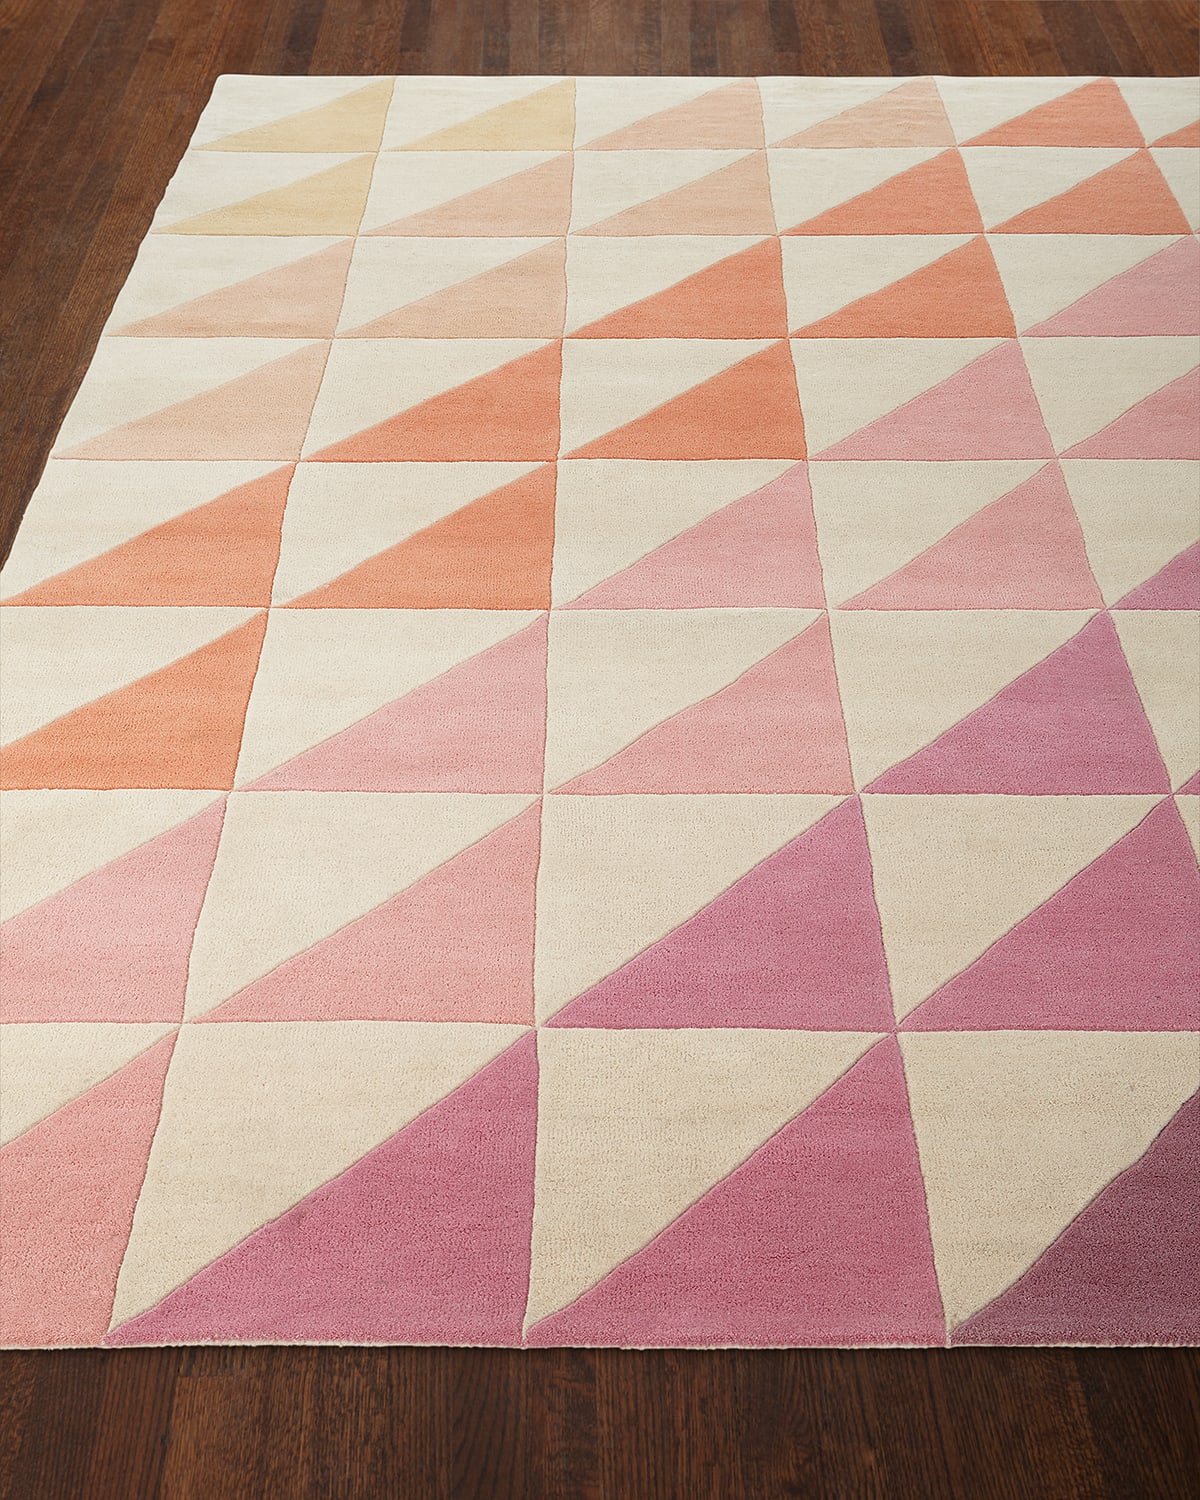 Fun Tiles Hand-Tufted Rug, 5' x 8'